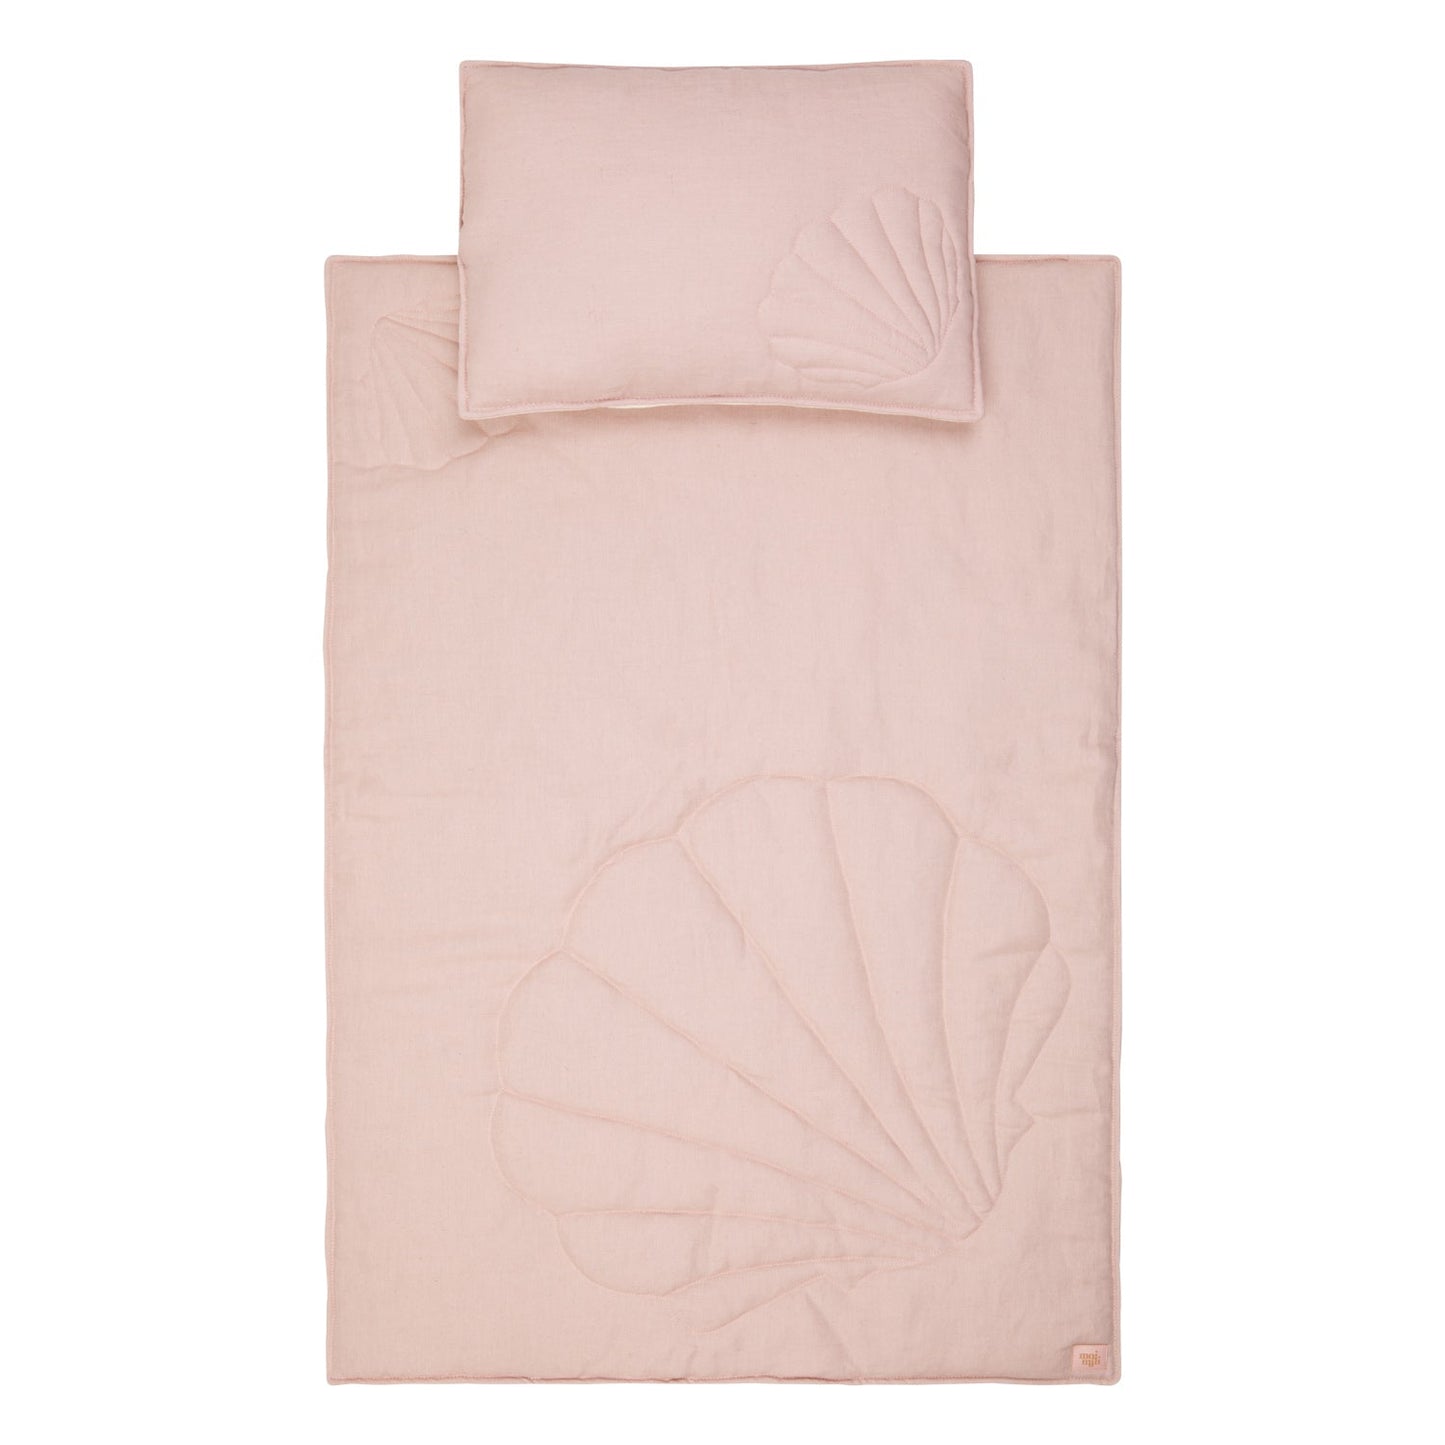 Linen "Powder Pink" Shell Child Cover Set